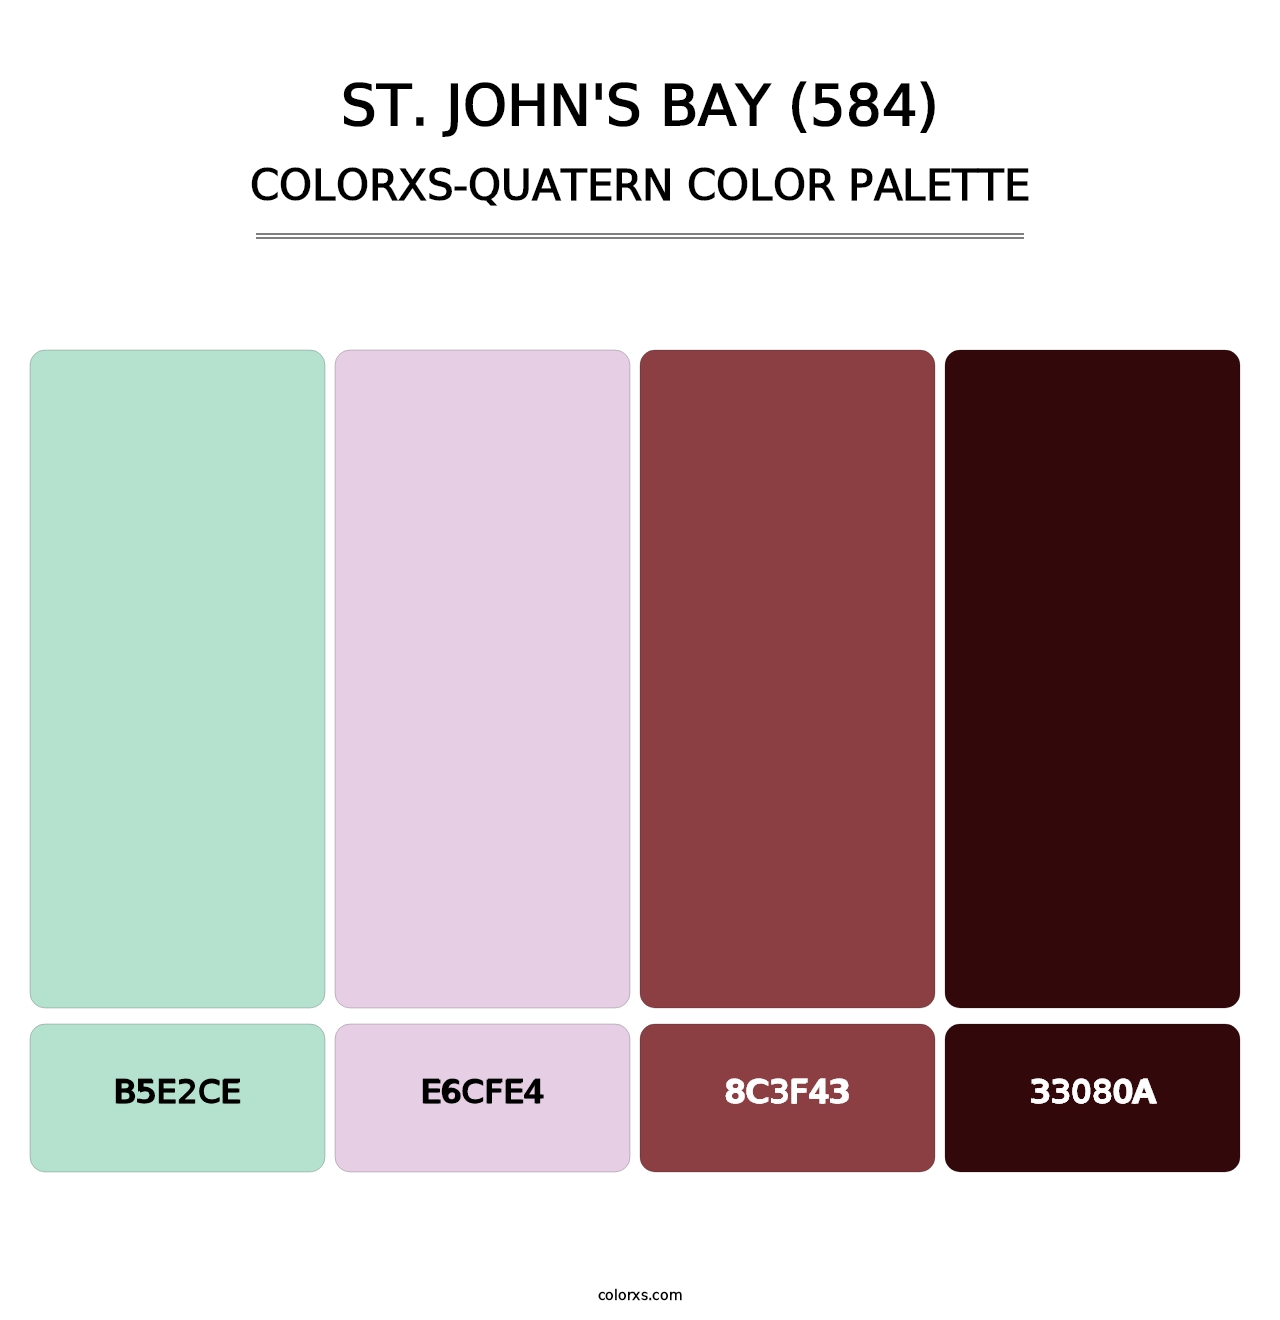 St. John's Bay (584) - Colorxs Quatern Palette